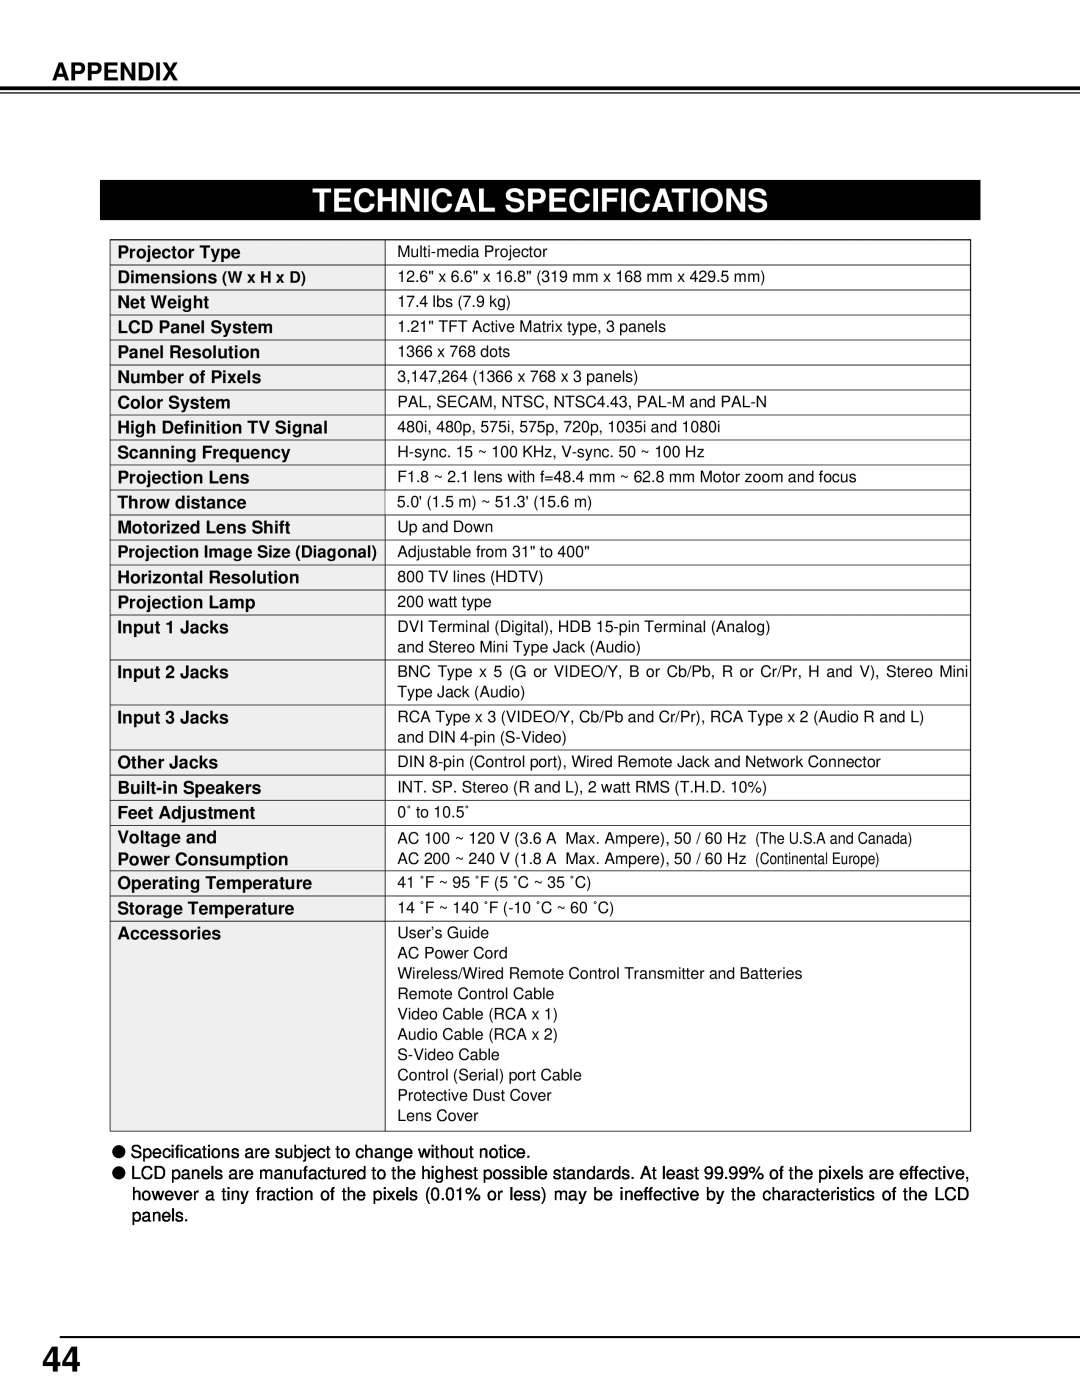 BOXLIGHT CINEMA 20HD manual Technical Specifications, Appendix 